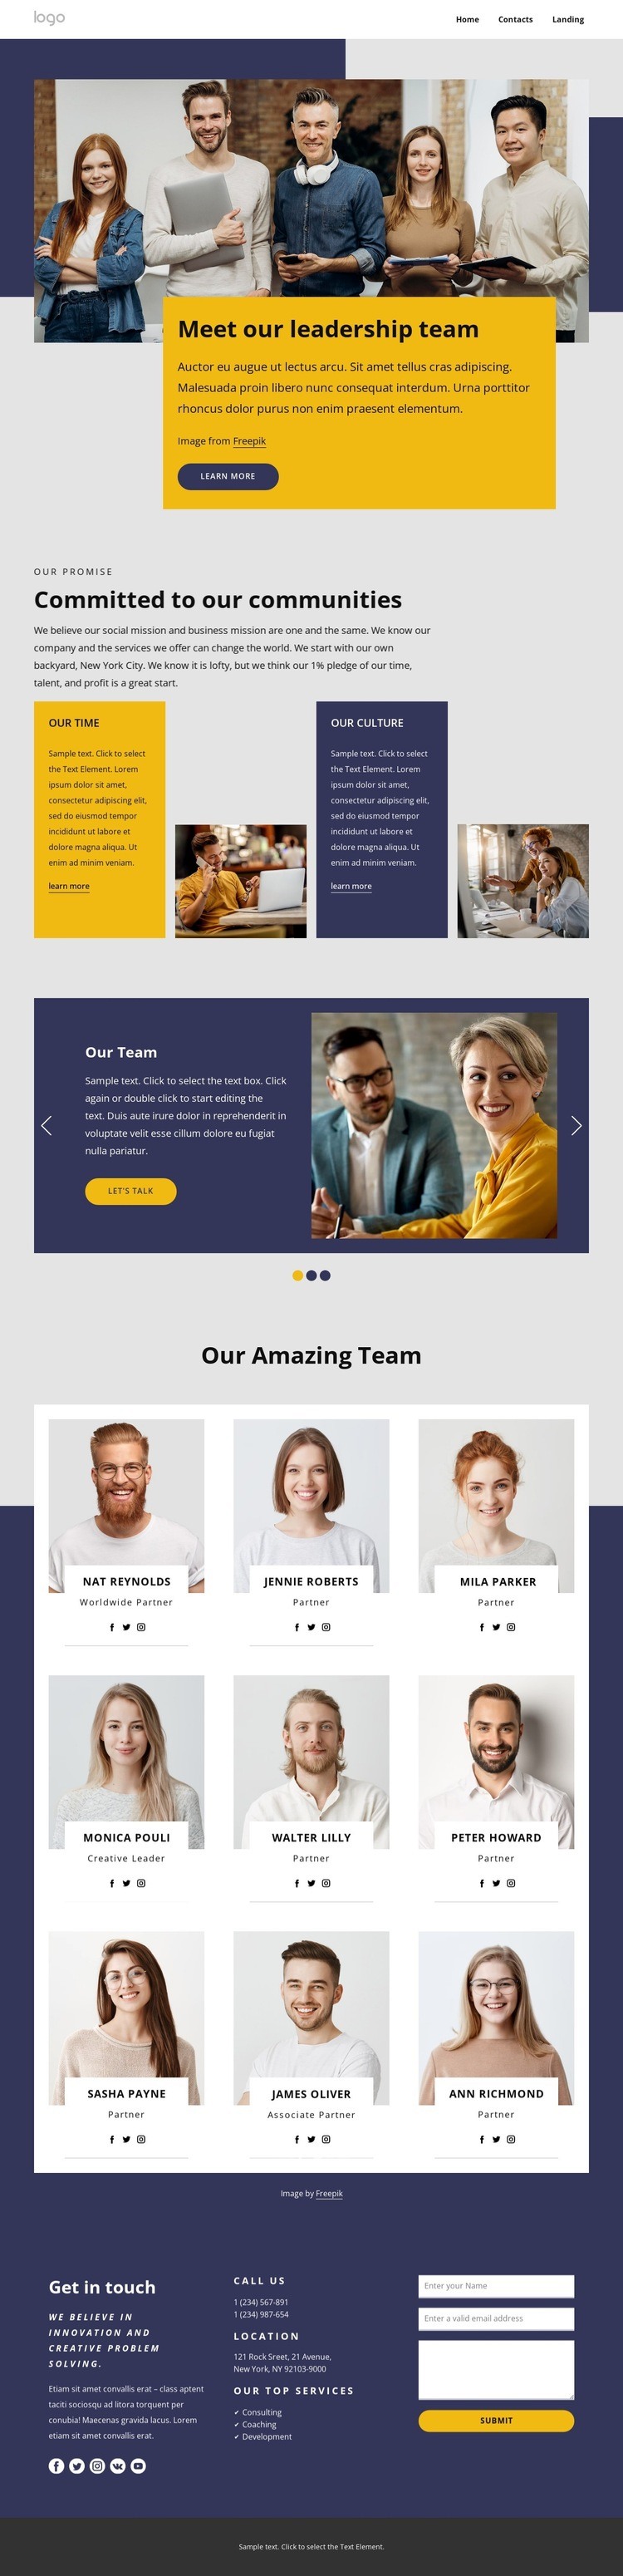 Meet our leadership team Web Page Design